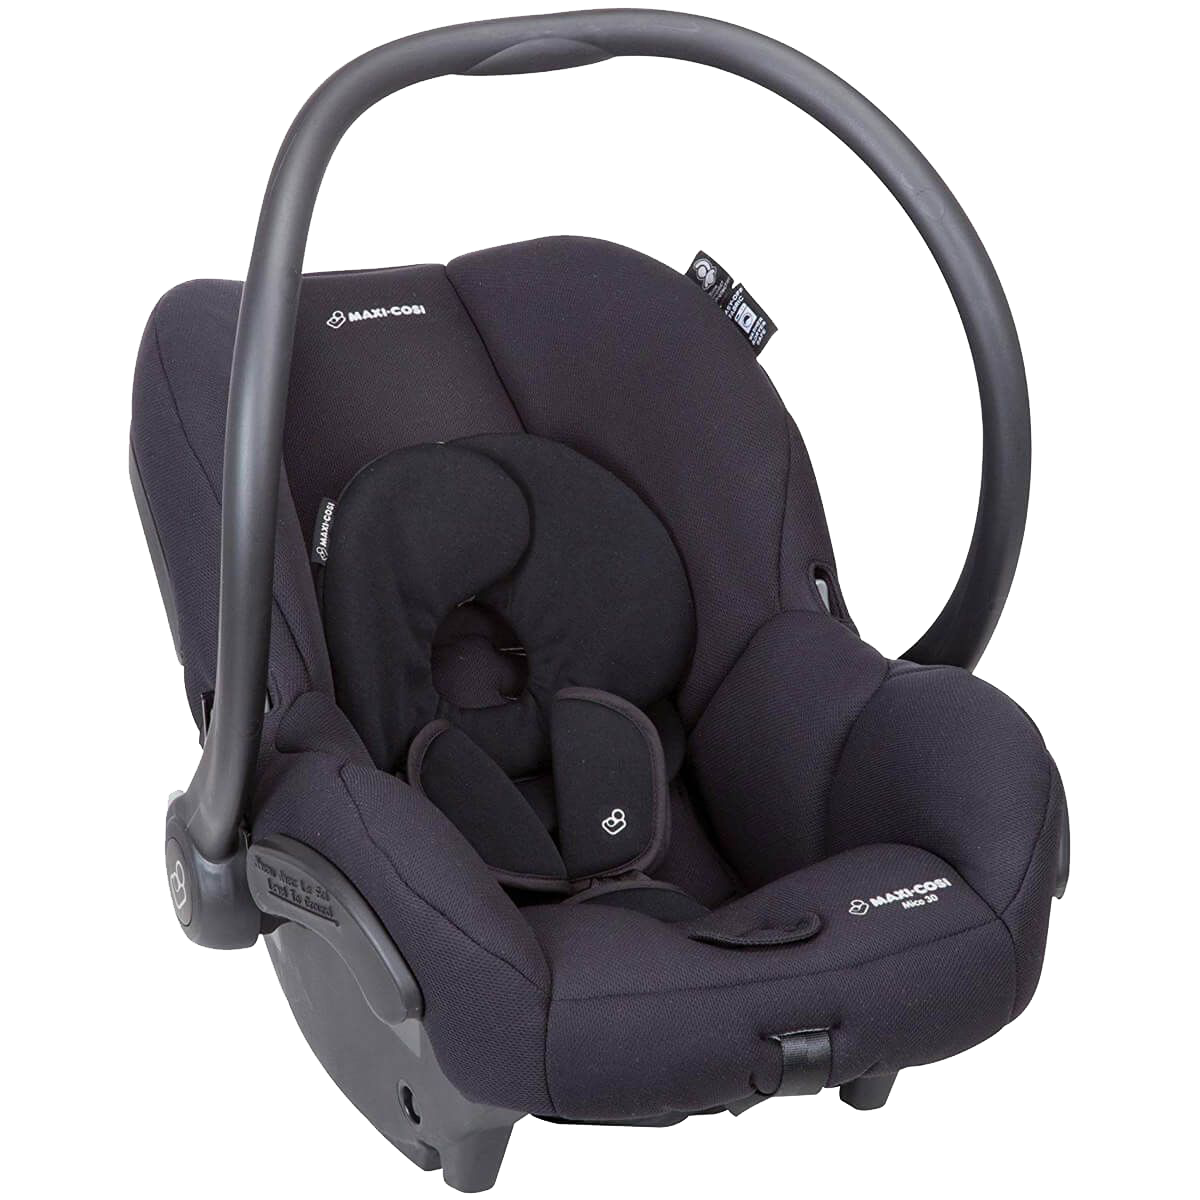 MaxiCosi MICO30 Infant Car Seat